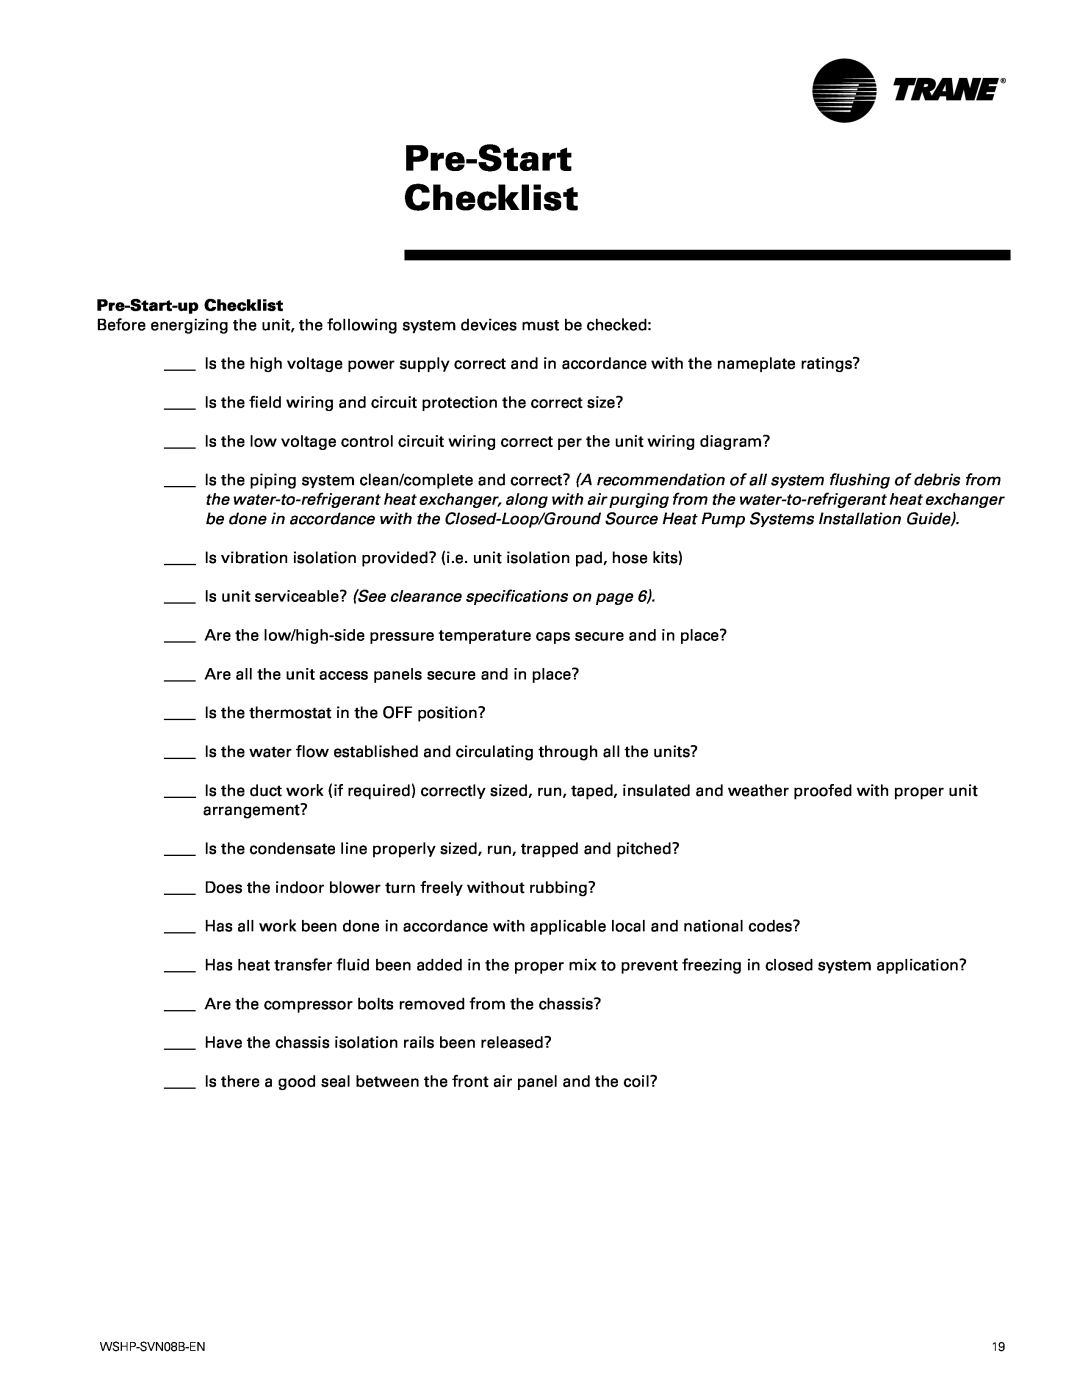 Trane GETB manual Pre-Start Checklist, Pre-Start-upChecklist 